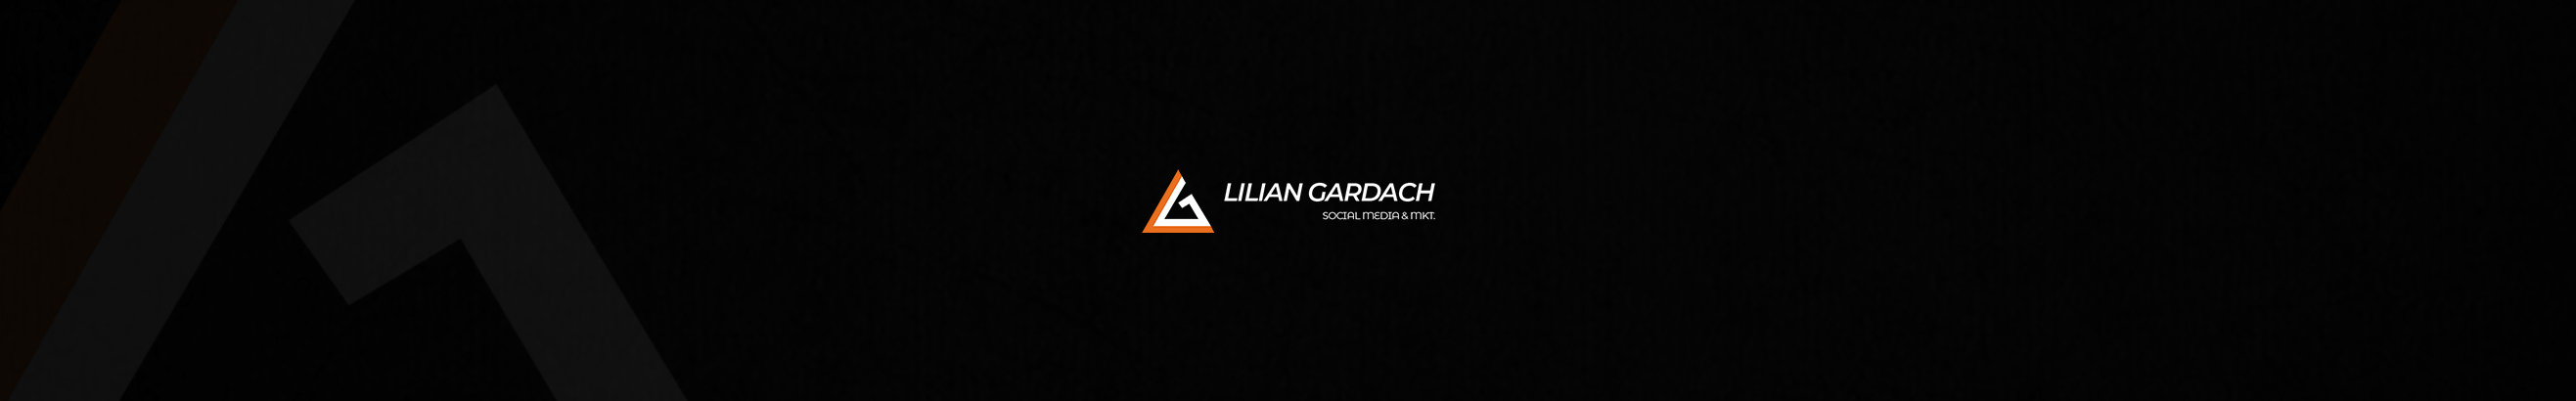 Lilian Gardach's profile banner